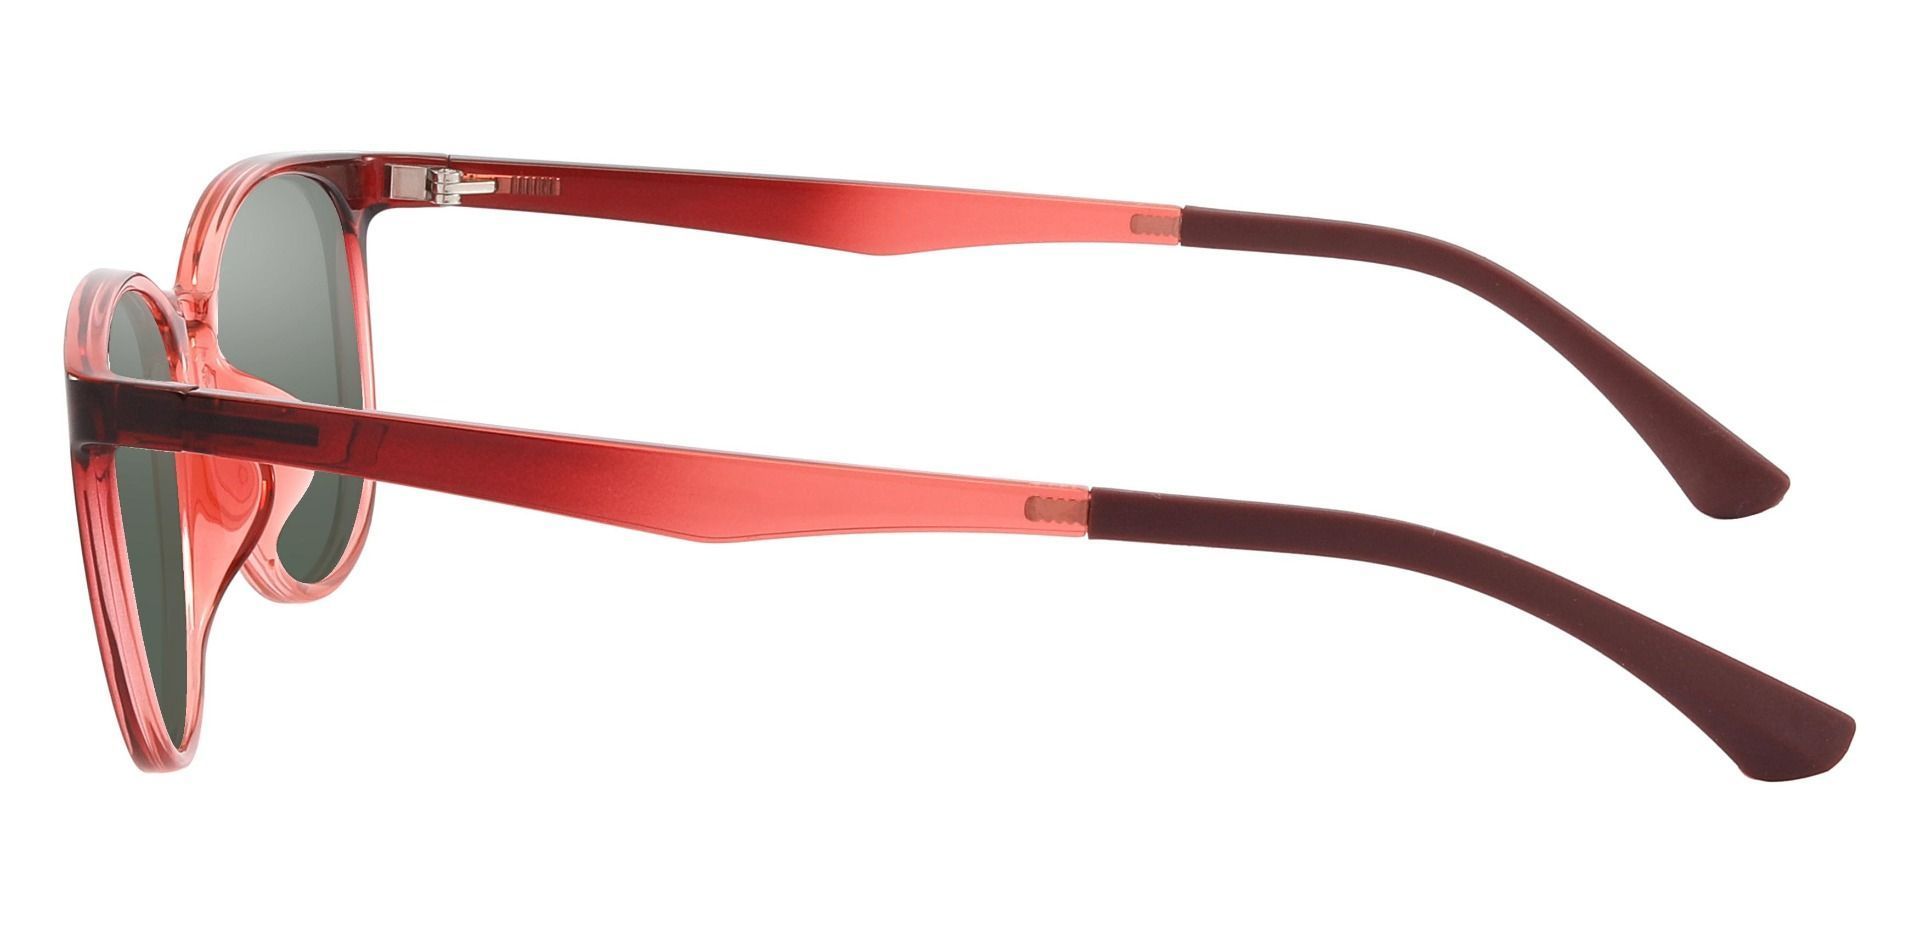 Pembroke Oval Lined Bifocal Sunglasses - Pink Frame With Green Lenses